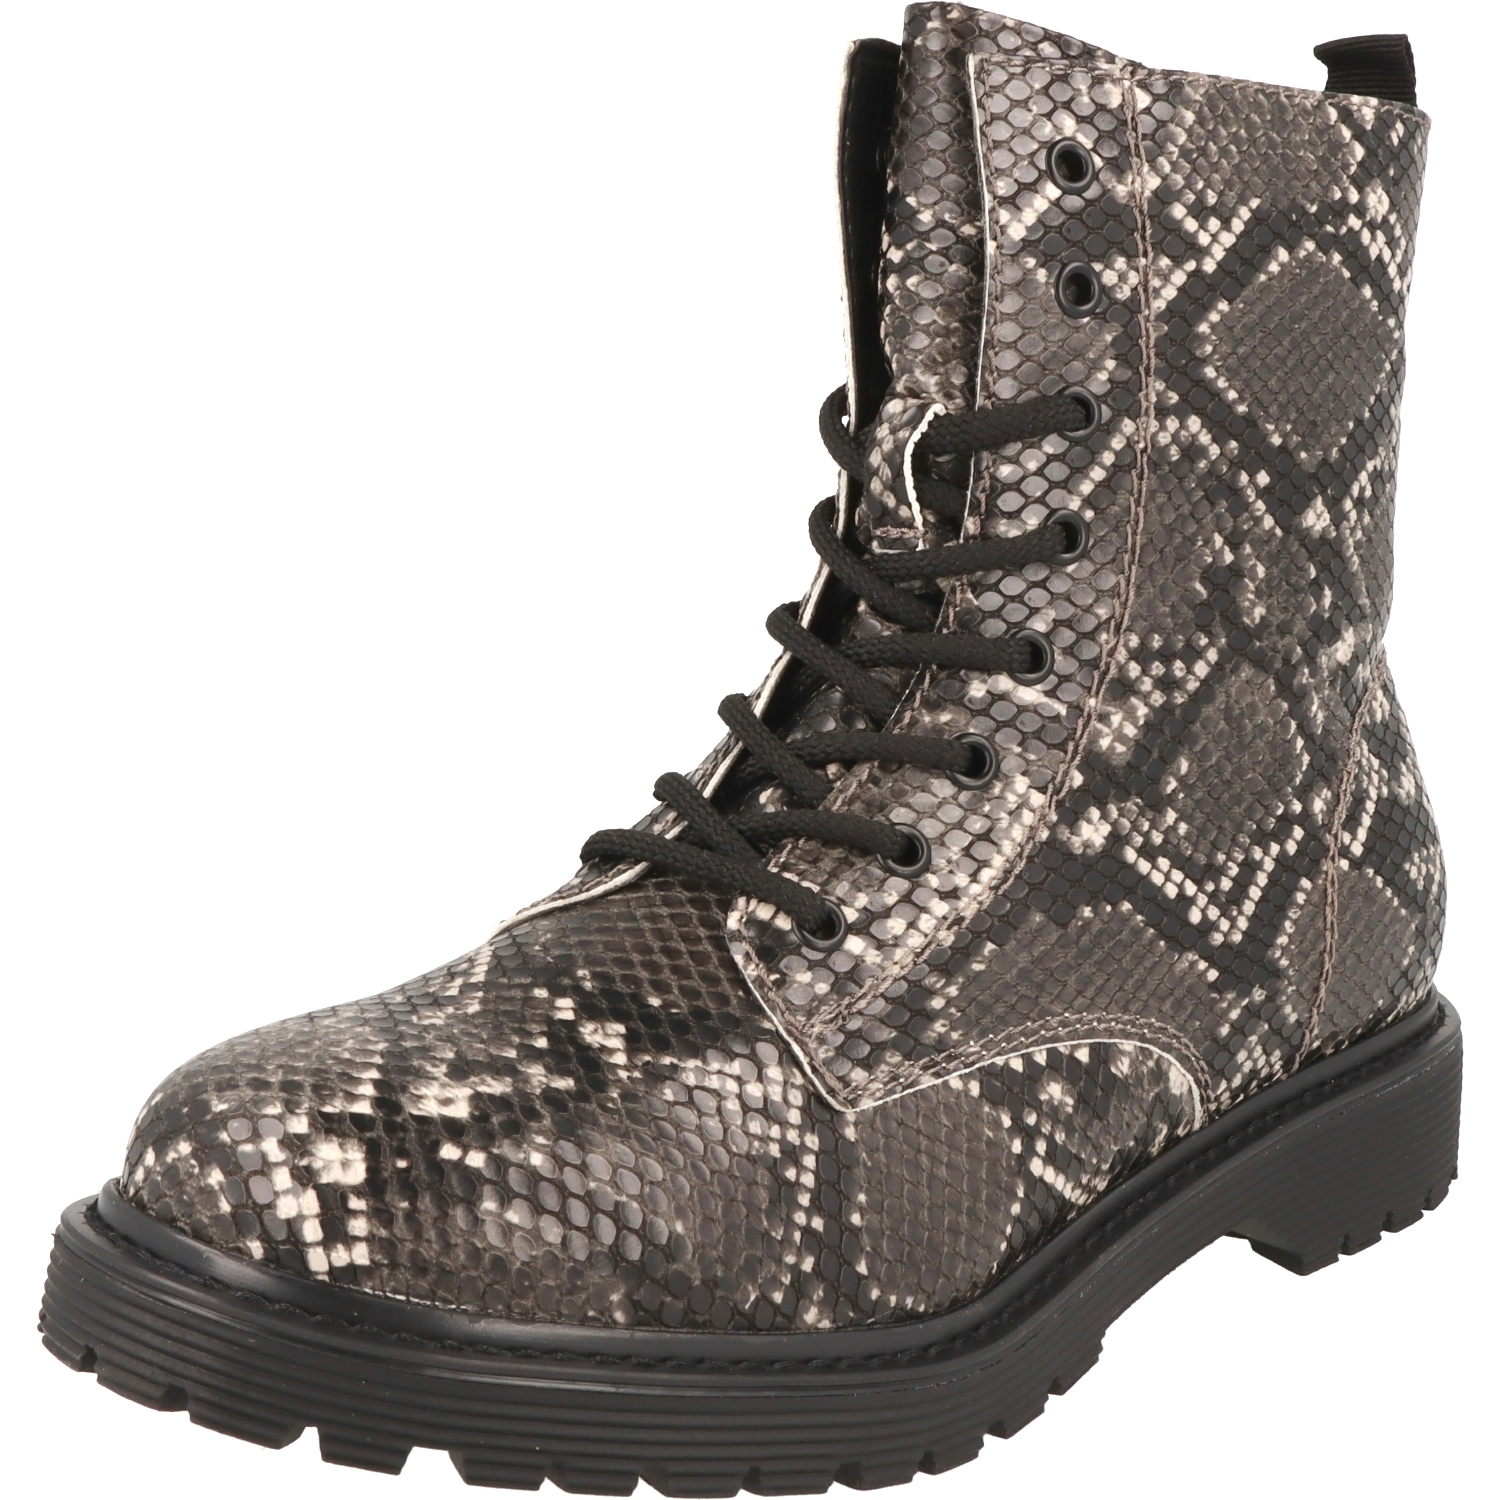 Jane Klain Damen Schuhe Boots Stiefel 252-490 Black/Grey Snake Reißverschluss